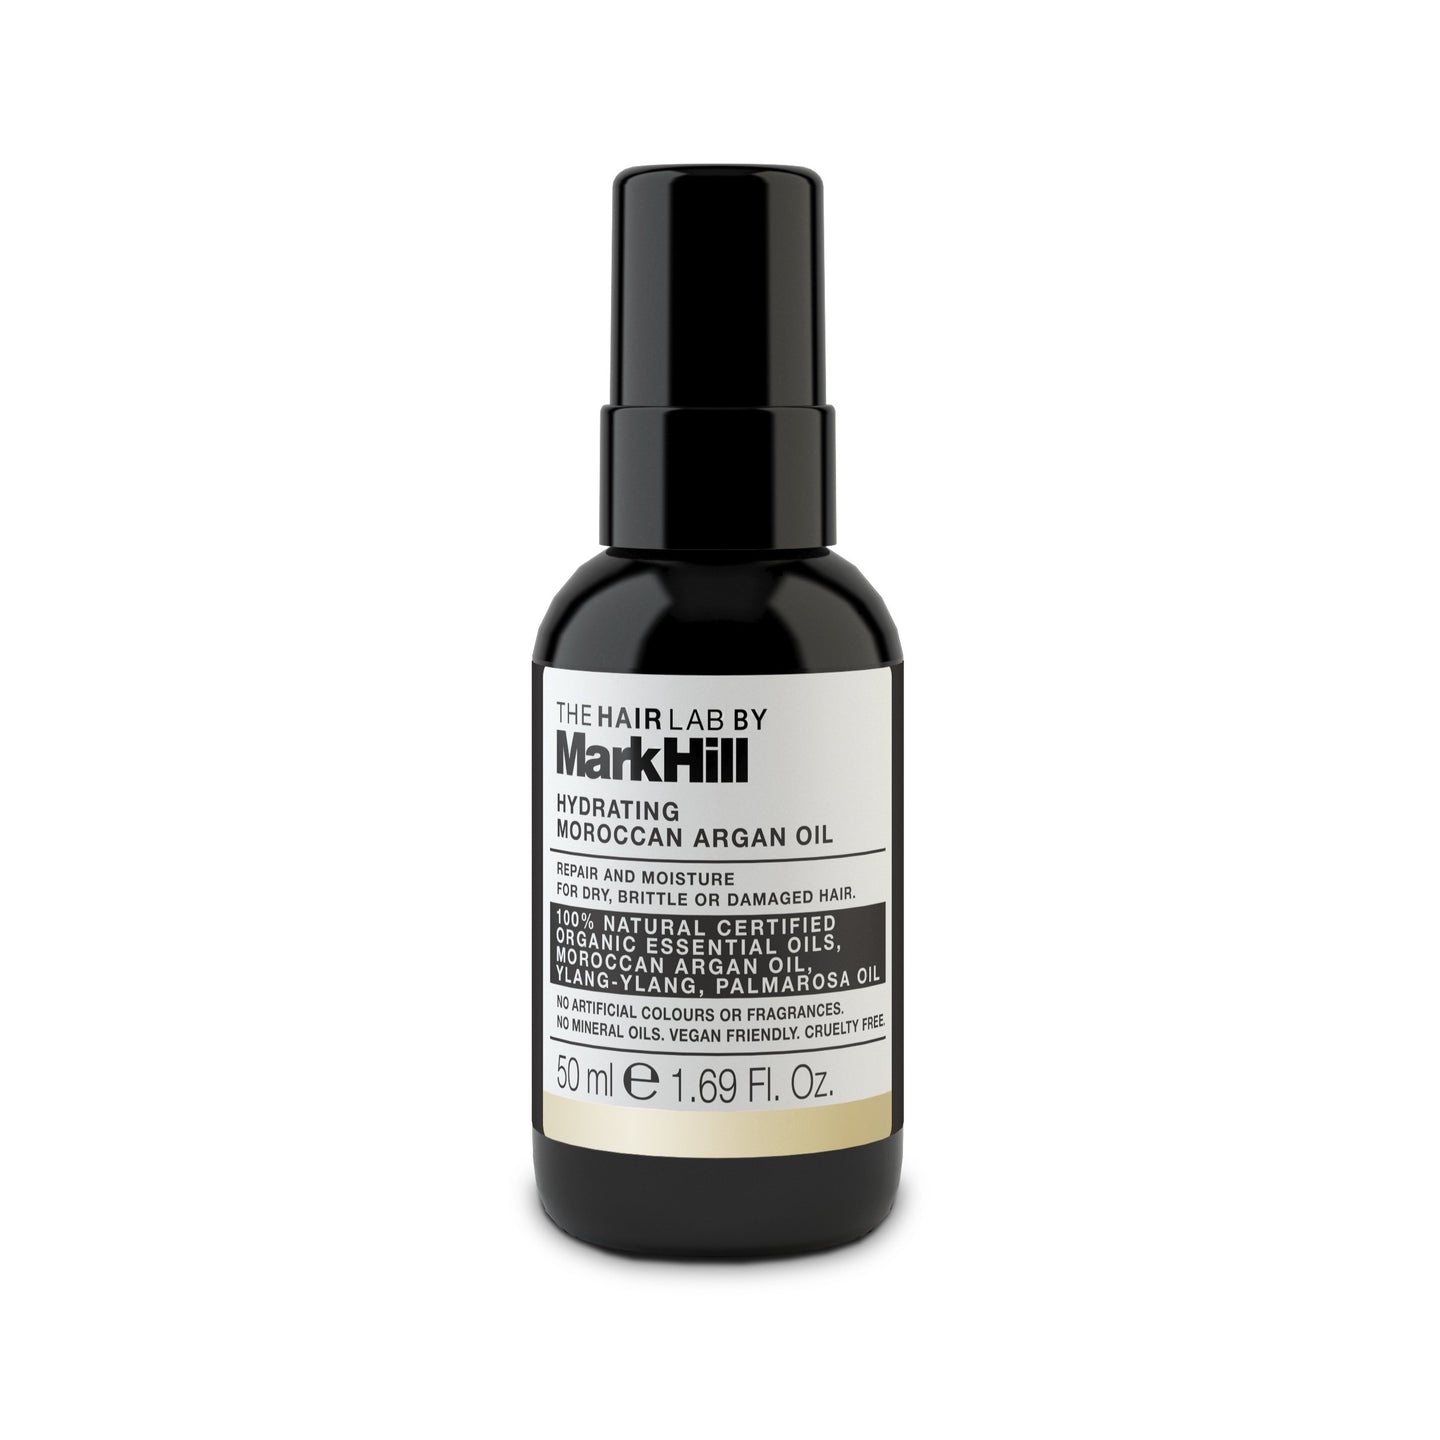 The Hair Lab by Mark Hill Hydrating Moroccan Argan Oil 50ml